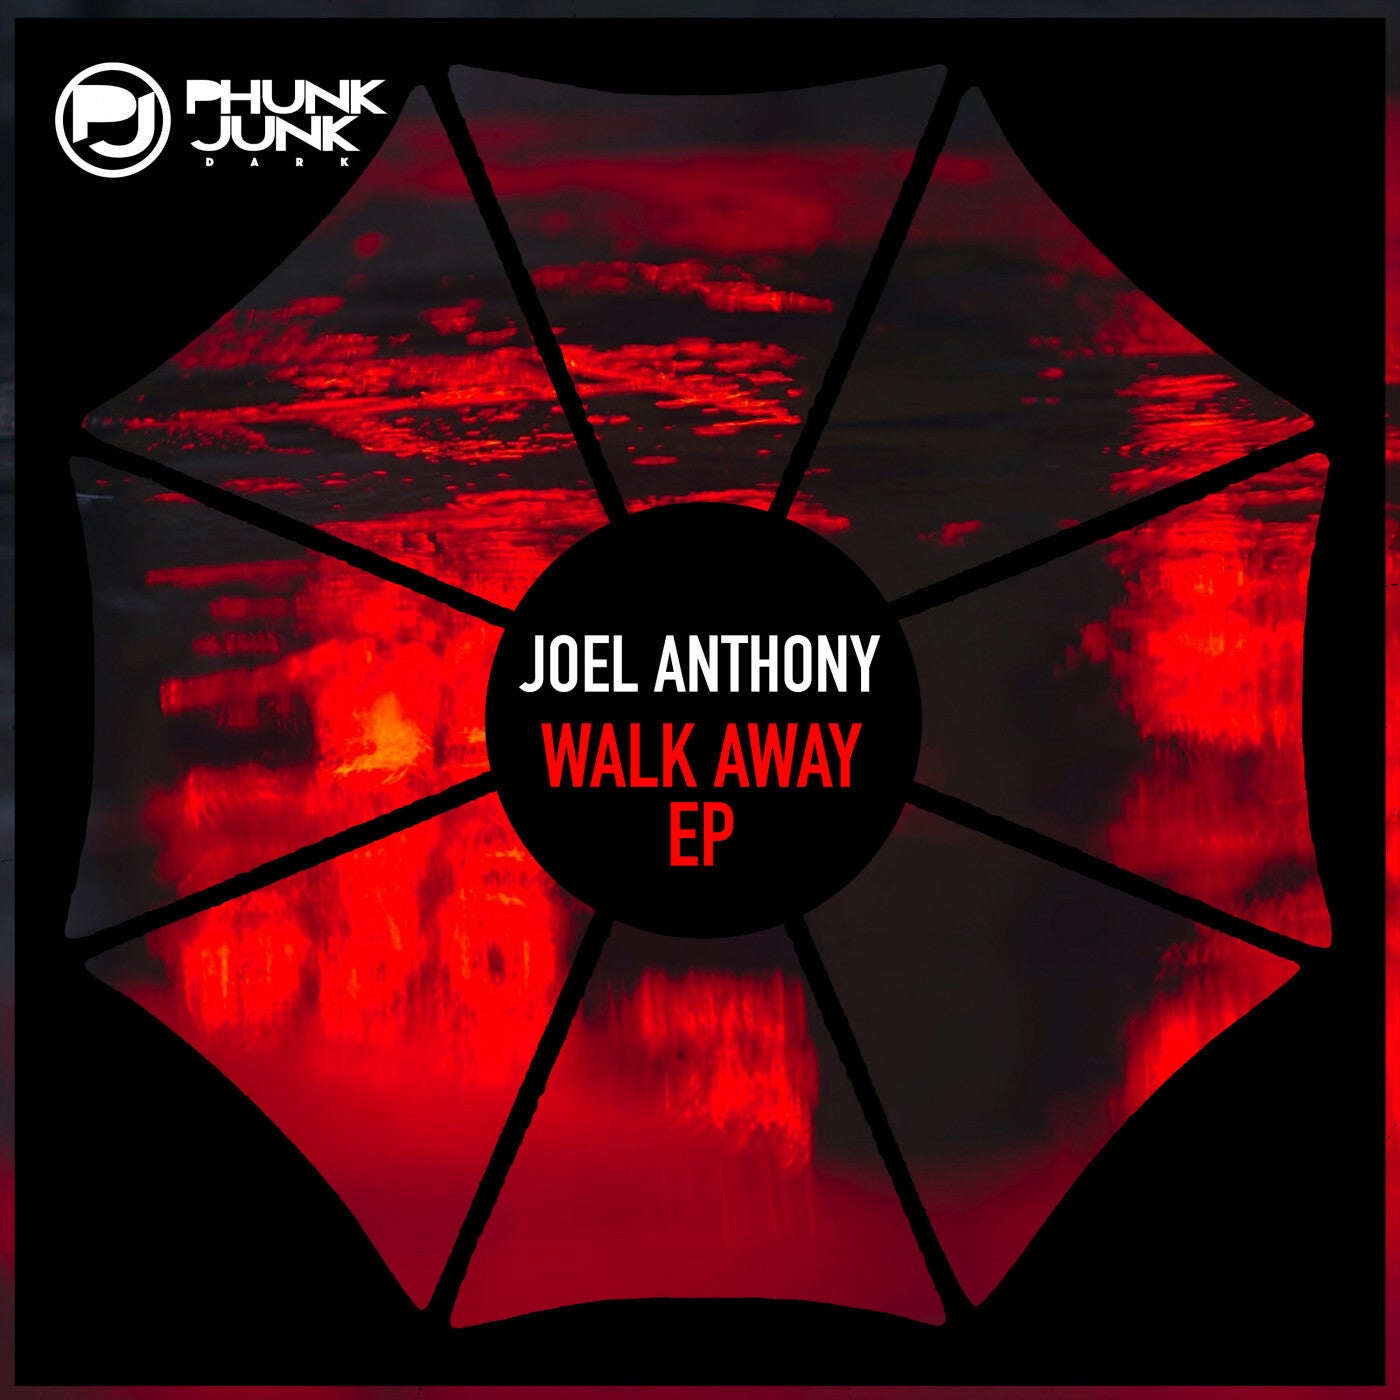 Joel Anthony – Walk Away E.P. [PJD077B]